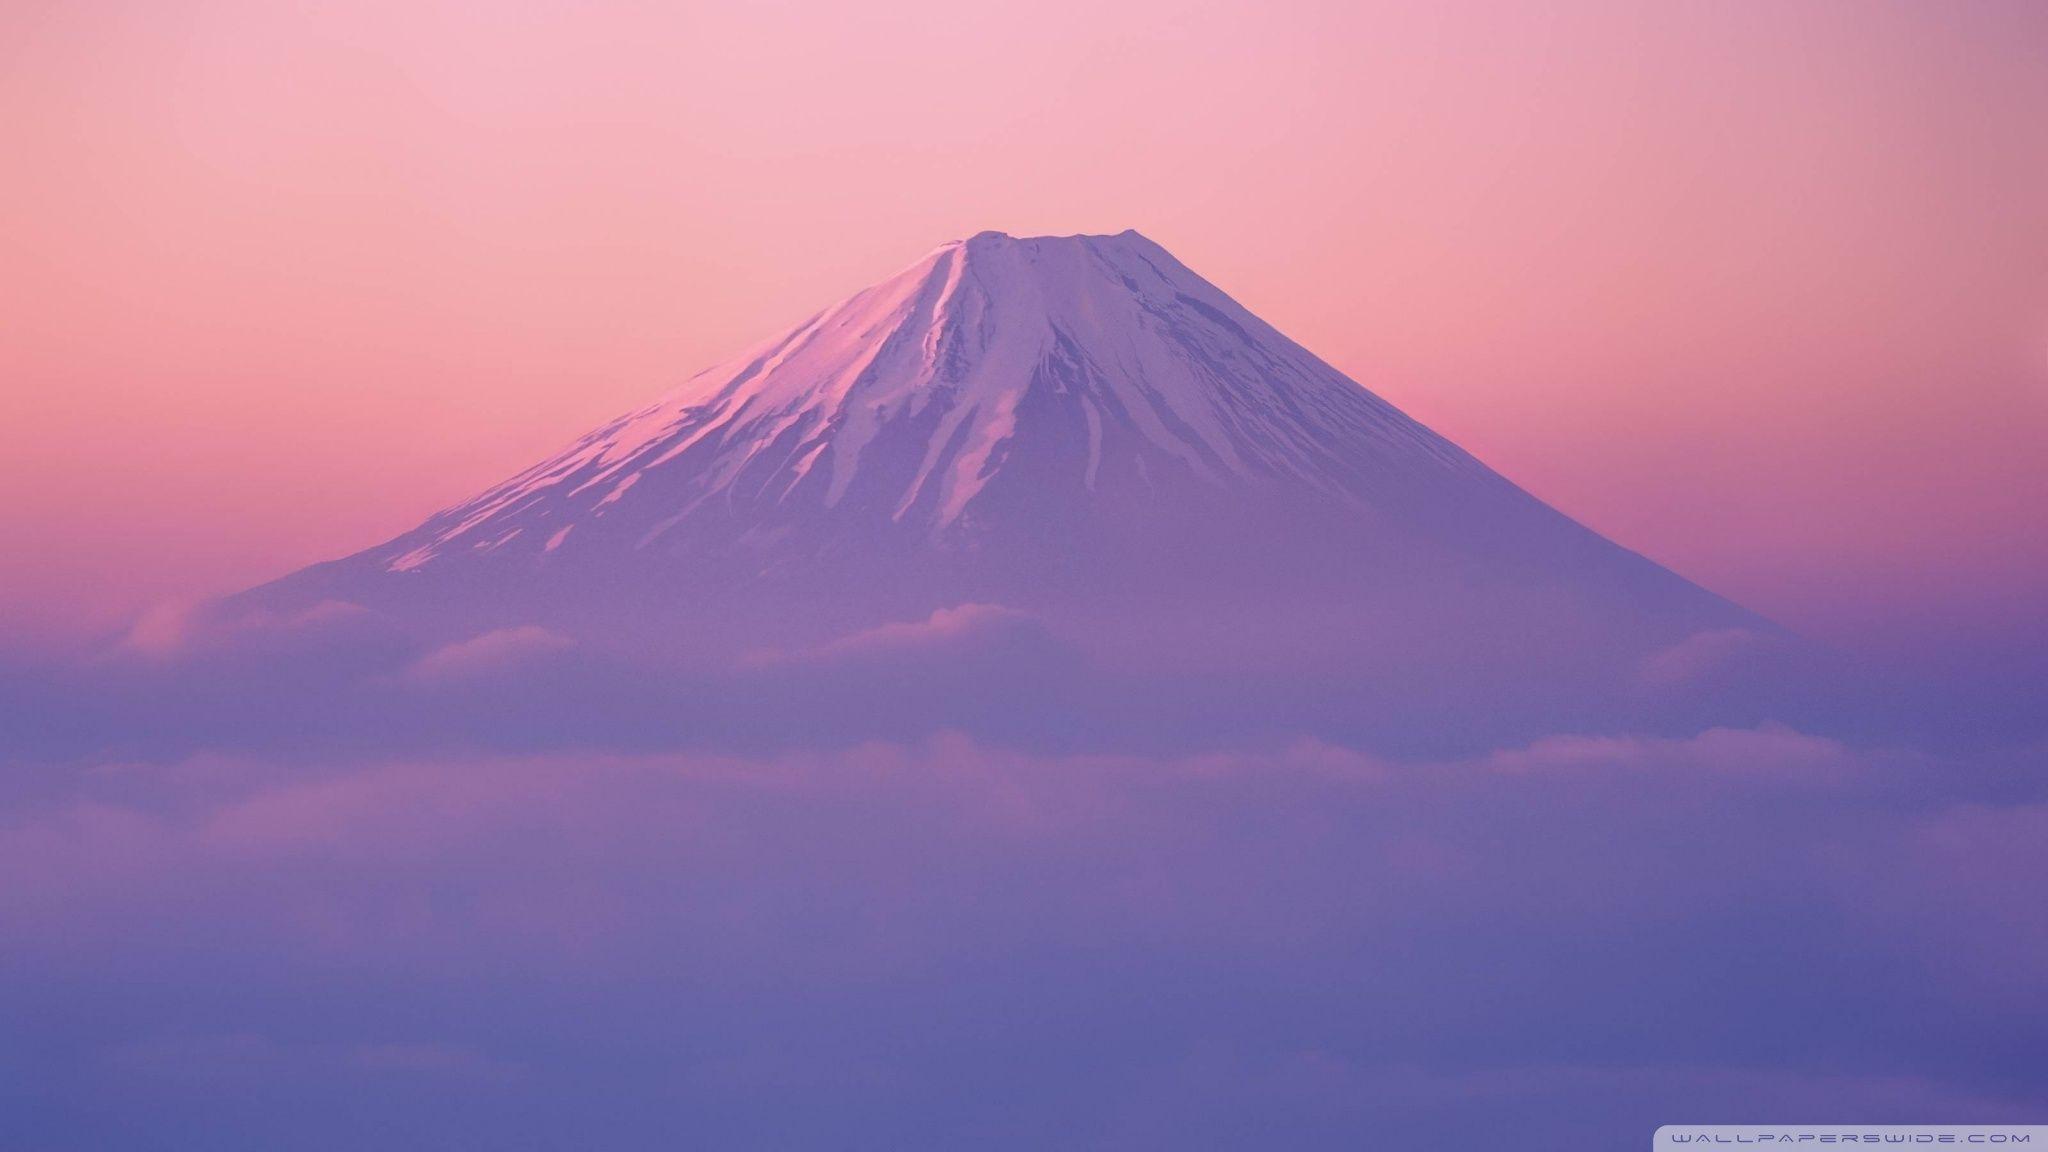 Mount Fuji Wallpaper in Mac OS X Lion ❤ 4K HD Desktop Wallpaper